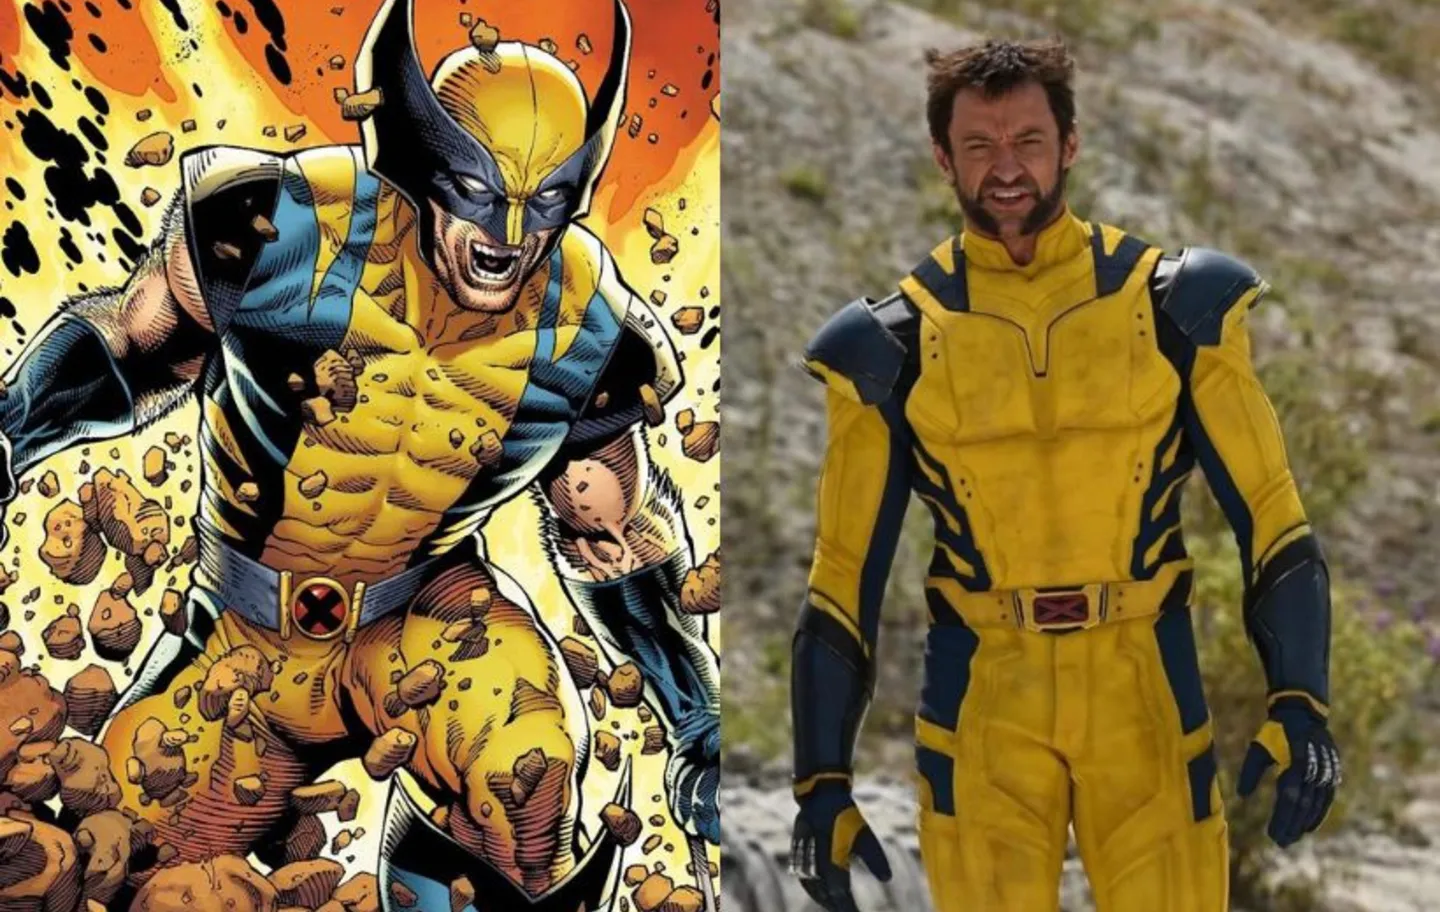 Diretor de Deadpool 3 sugere vencedor de luta entre Wolverine e Deadpool